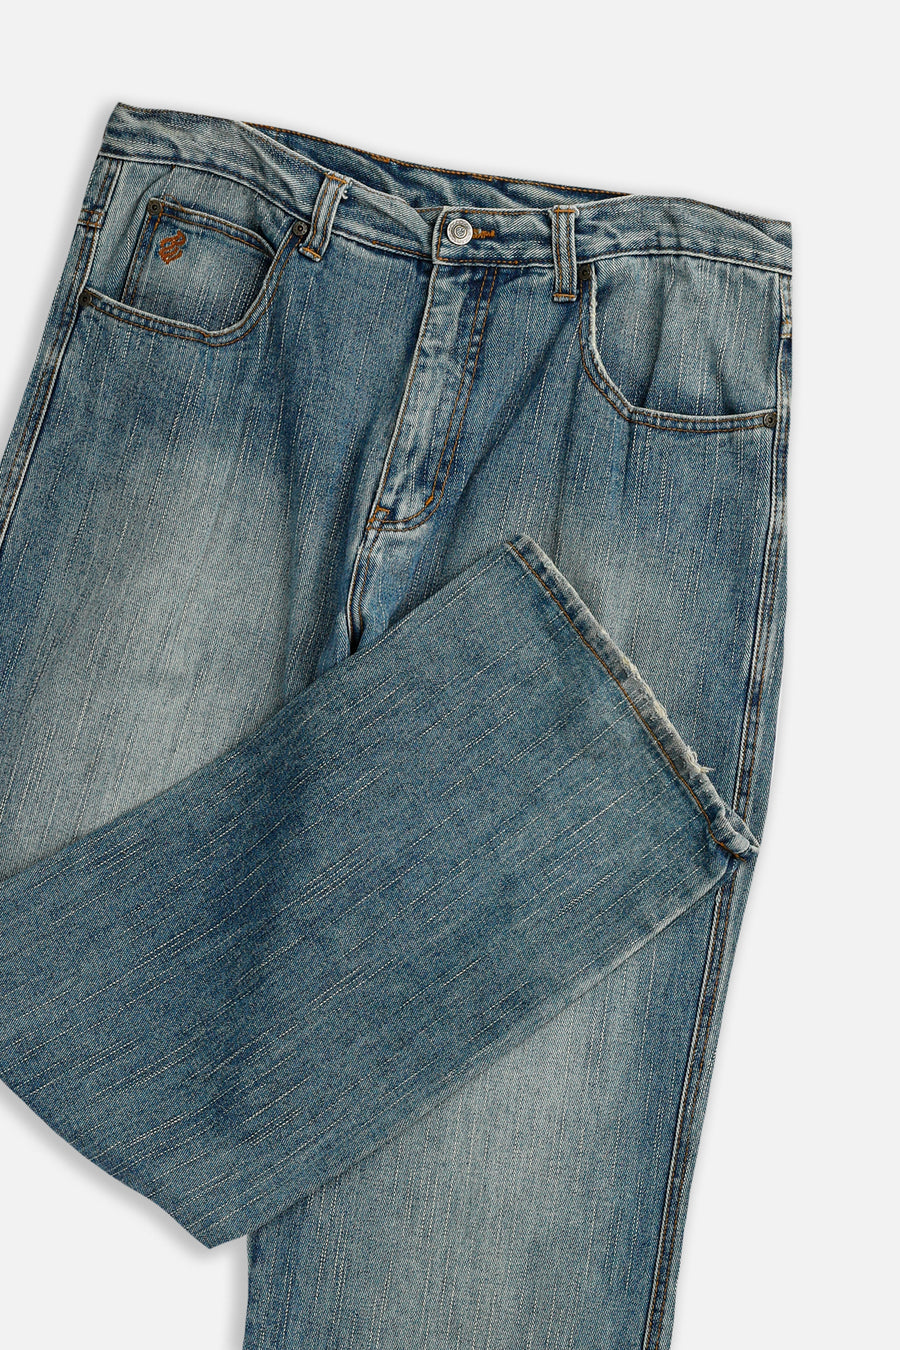 Vintage Rocawear Denim Pants - W34